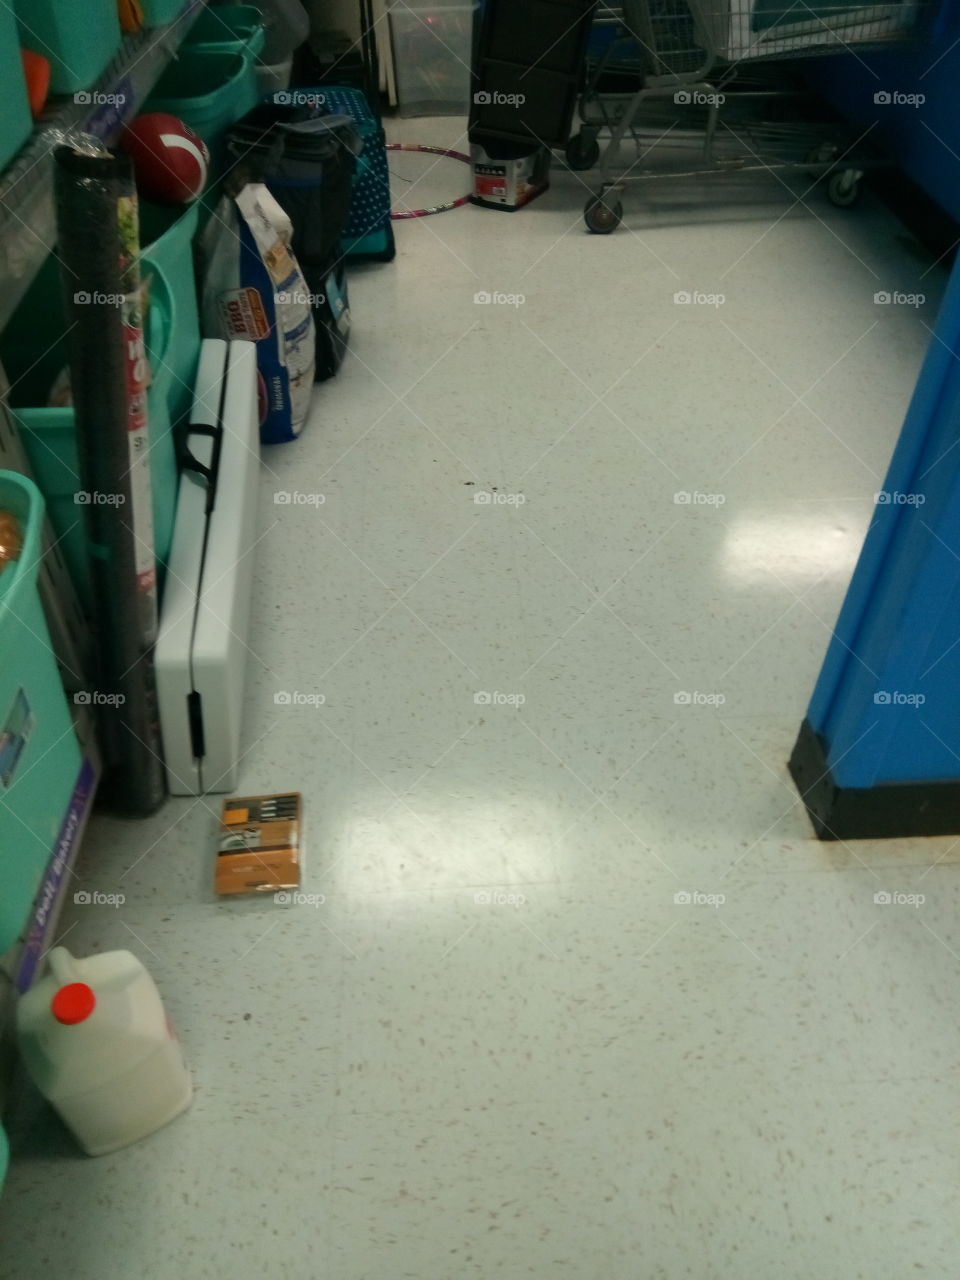 Floors at work